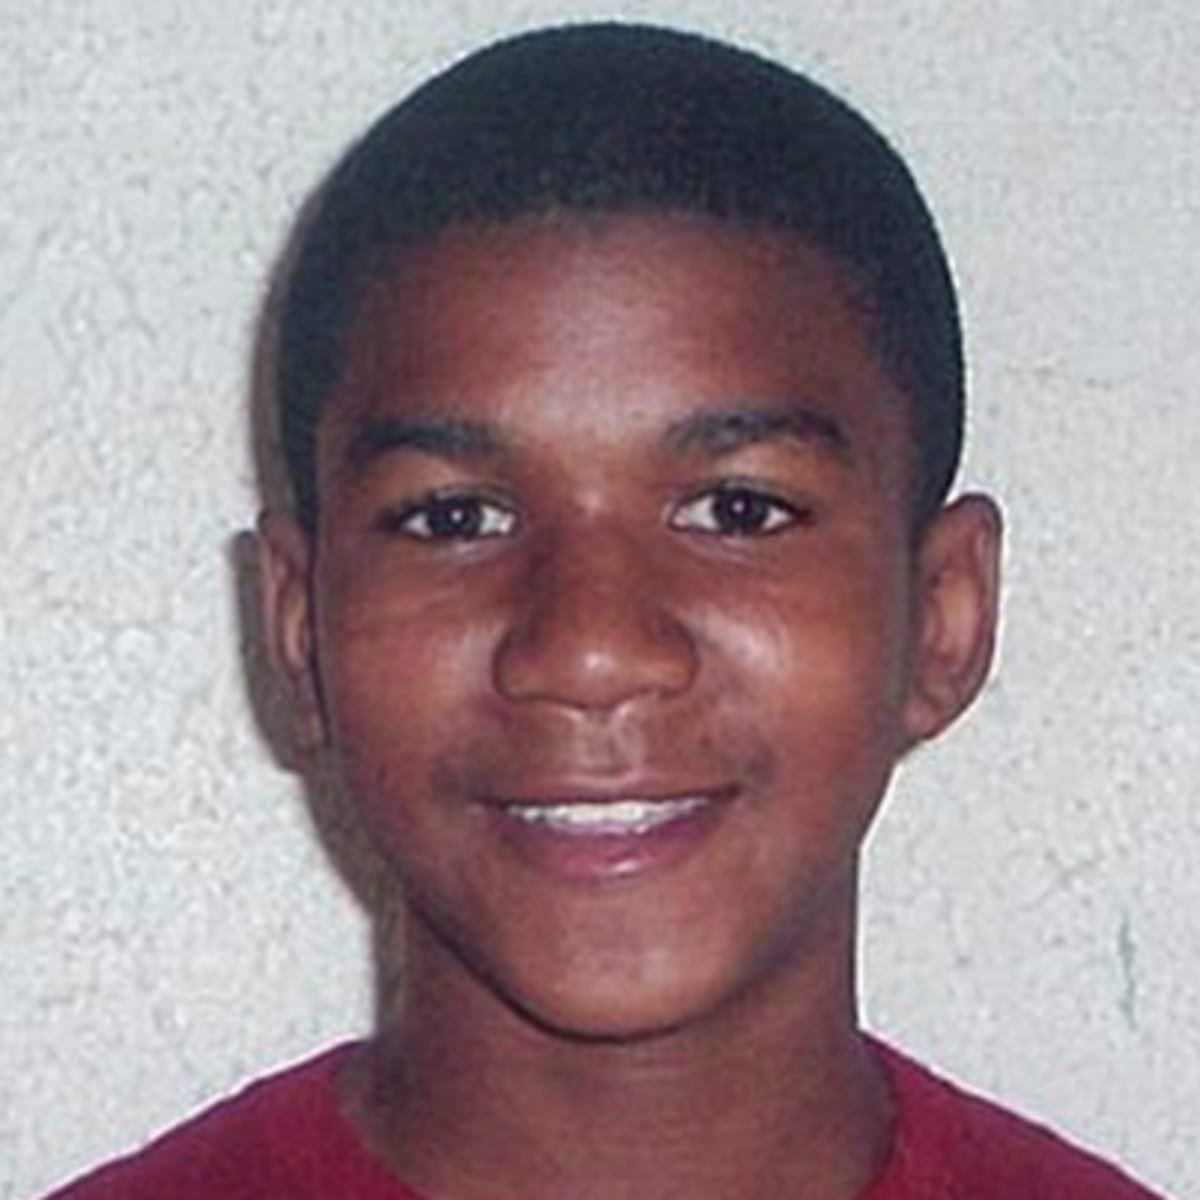 Happy 27th Birthday to Trayvon Martin who was shot & killed by George Zimmerman Happy 27th Birthday Trayvon Martin 